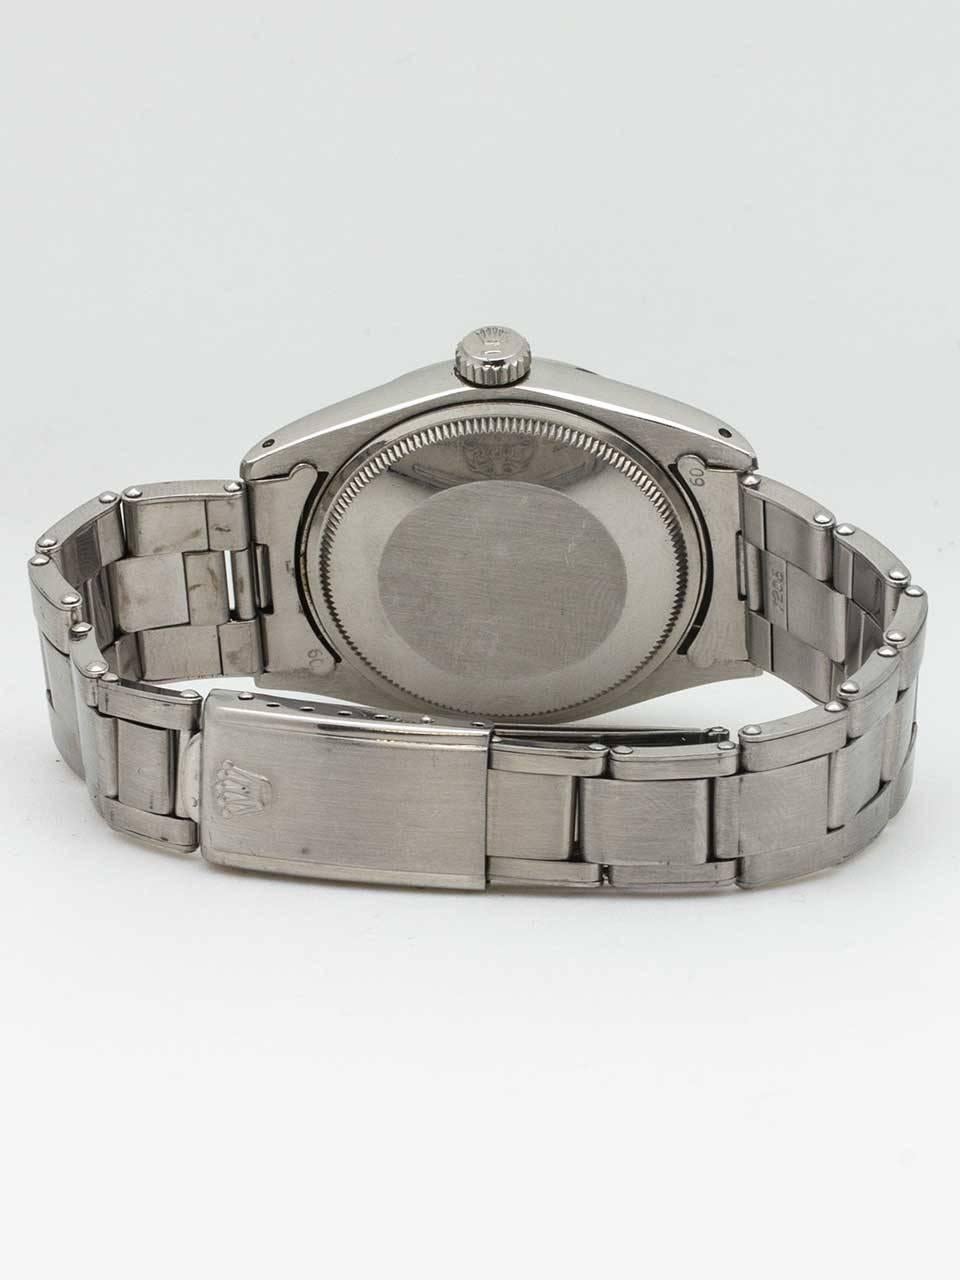 Women's or Men's Rolex Stainless Steel Oyster Perpetual Date Wristwatch Ref 1500